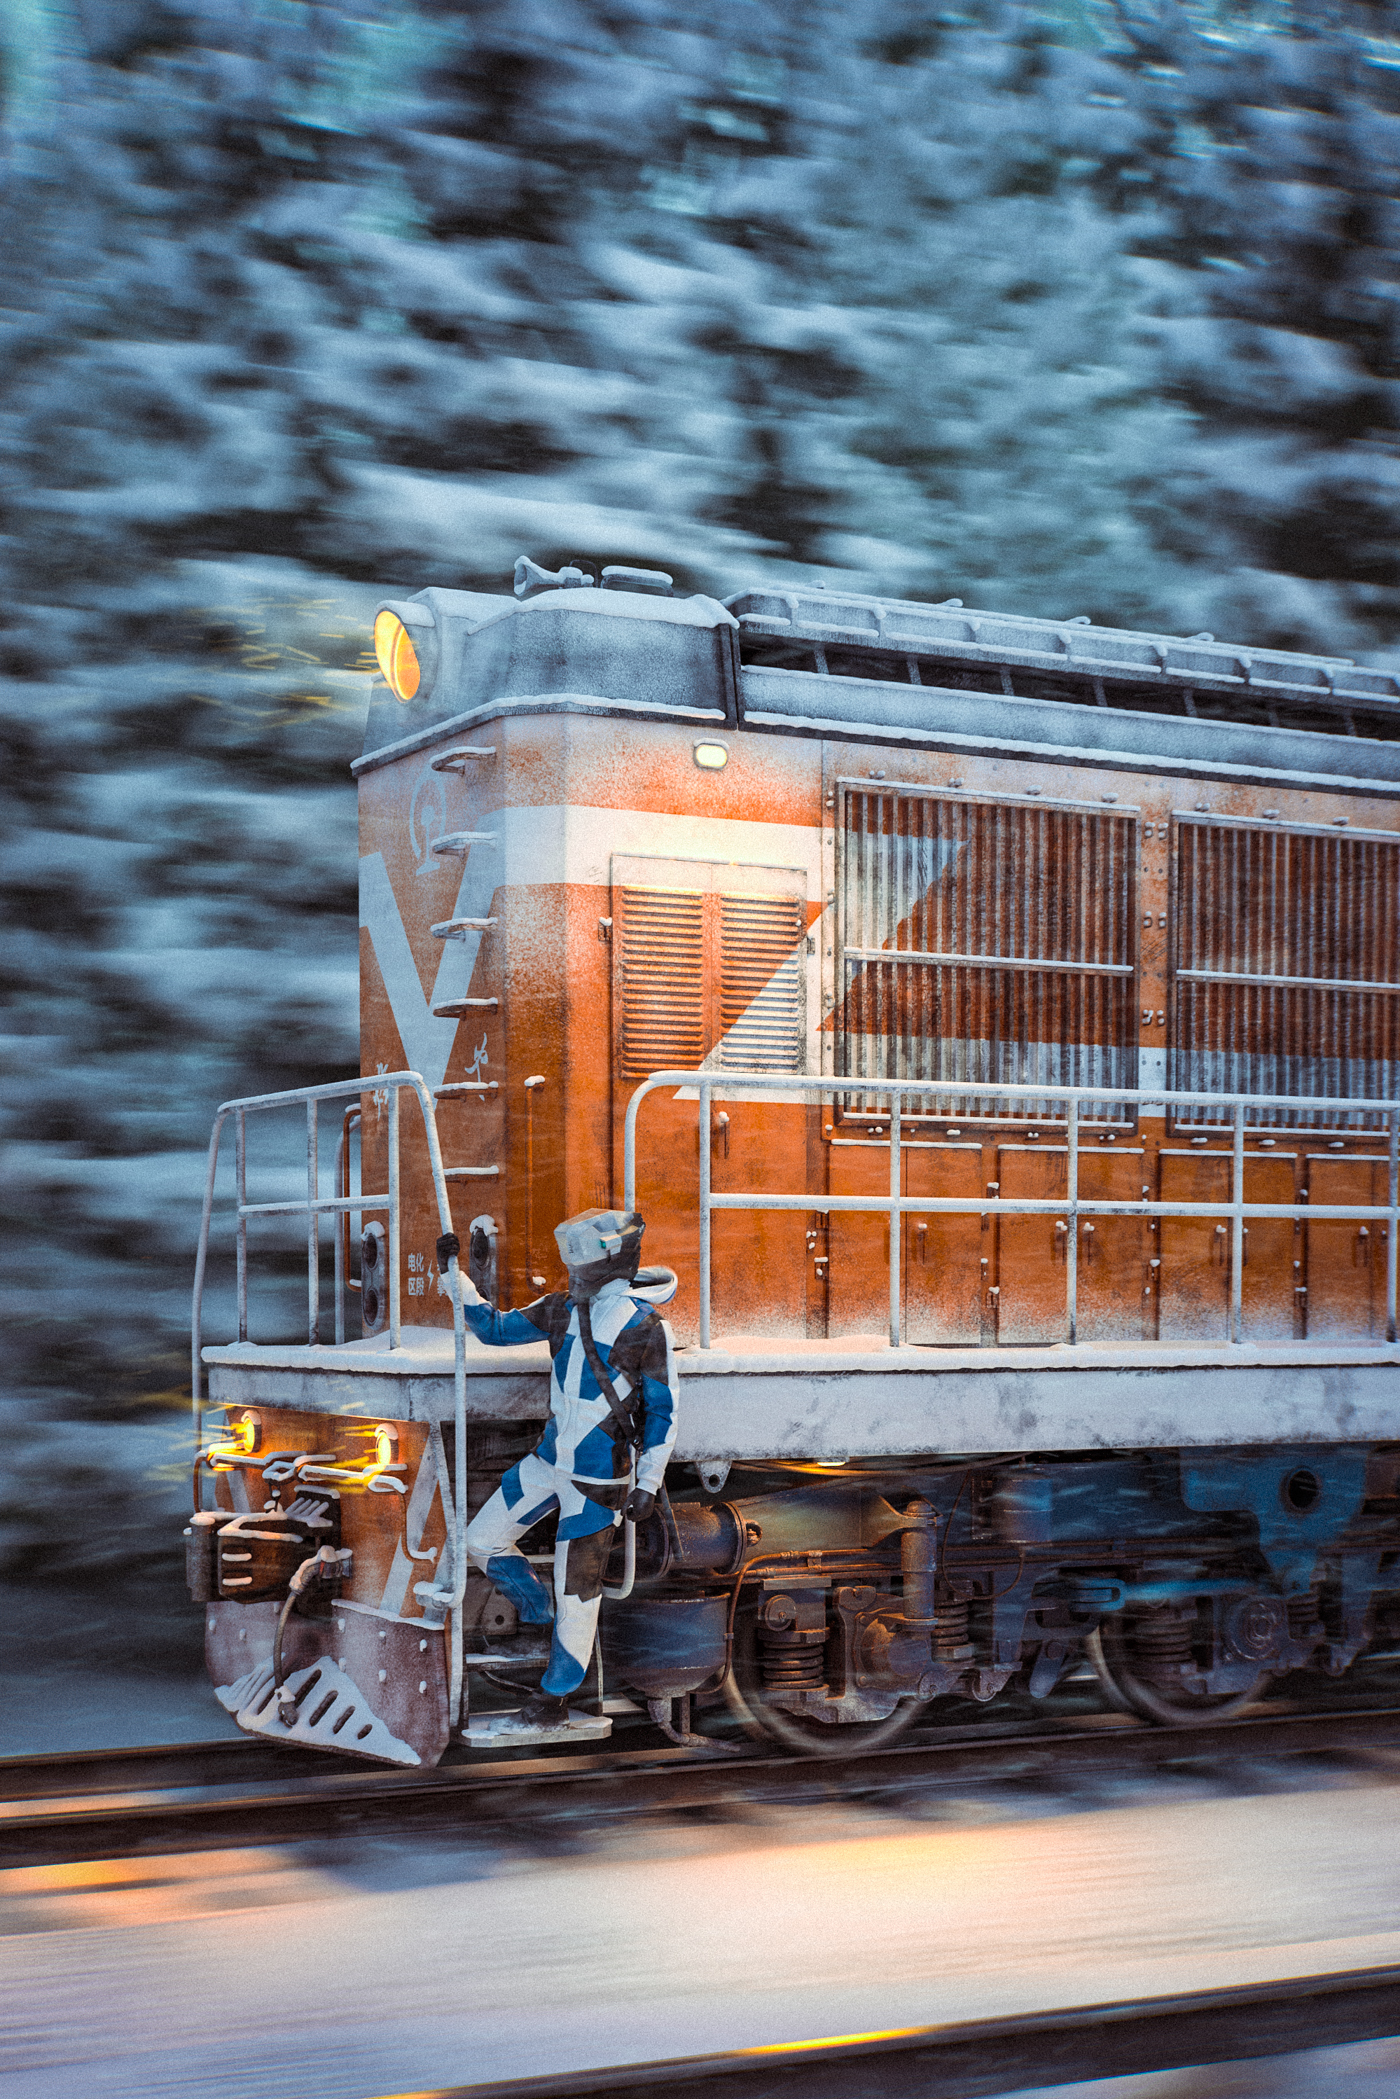 flame force 3D CG Cyberpunk Helmet locomotive train railway snow